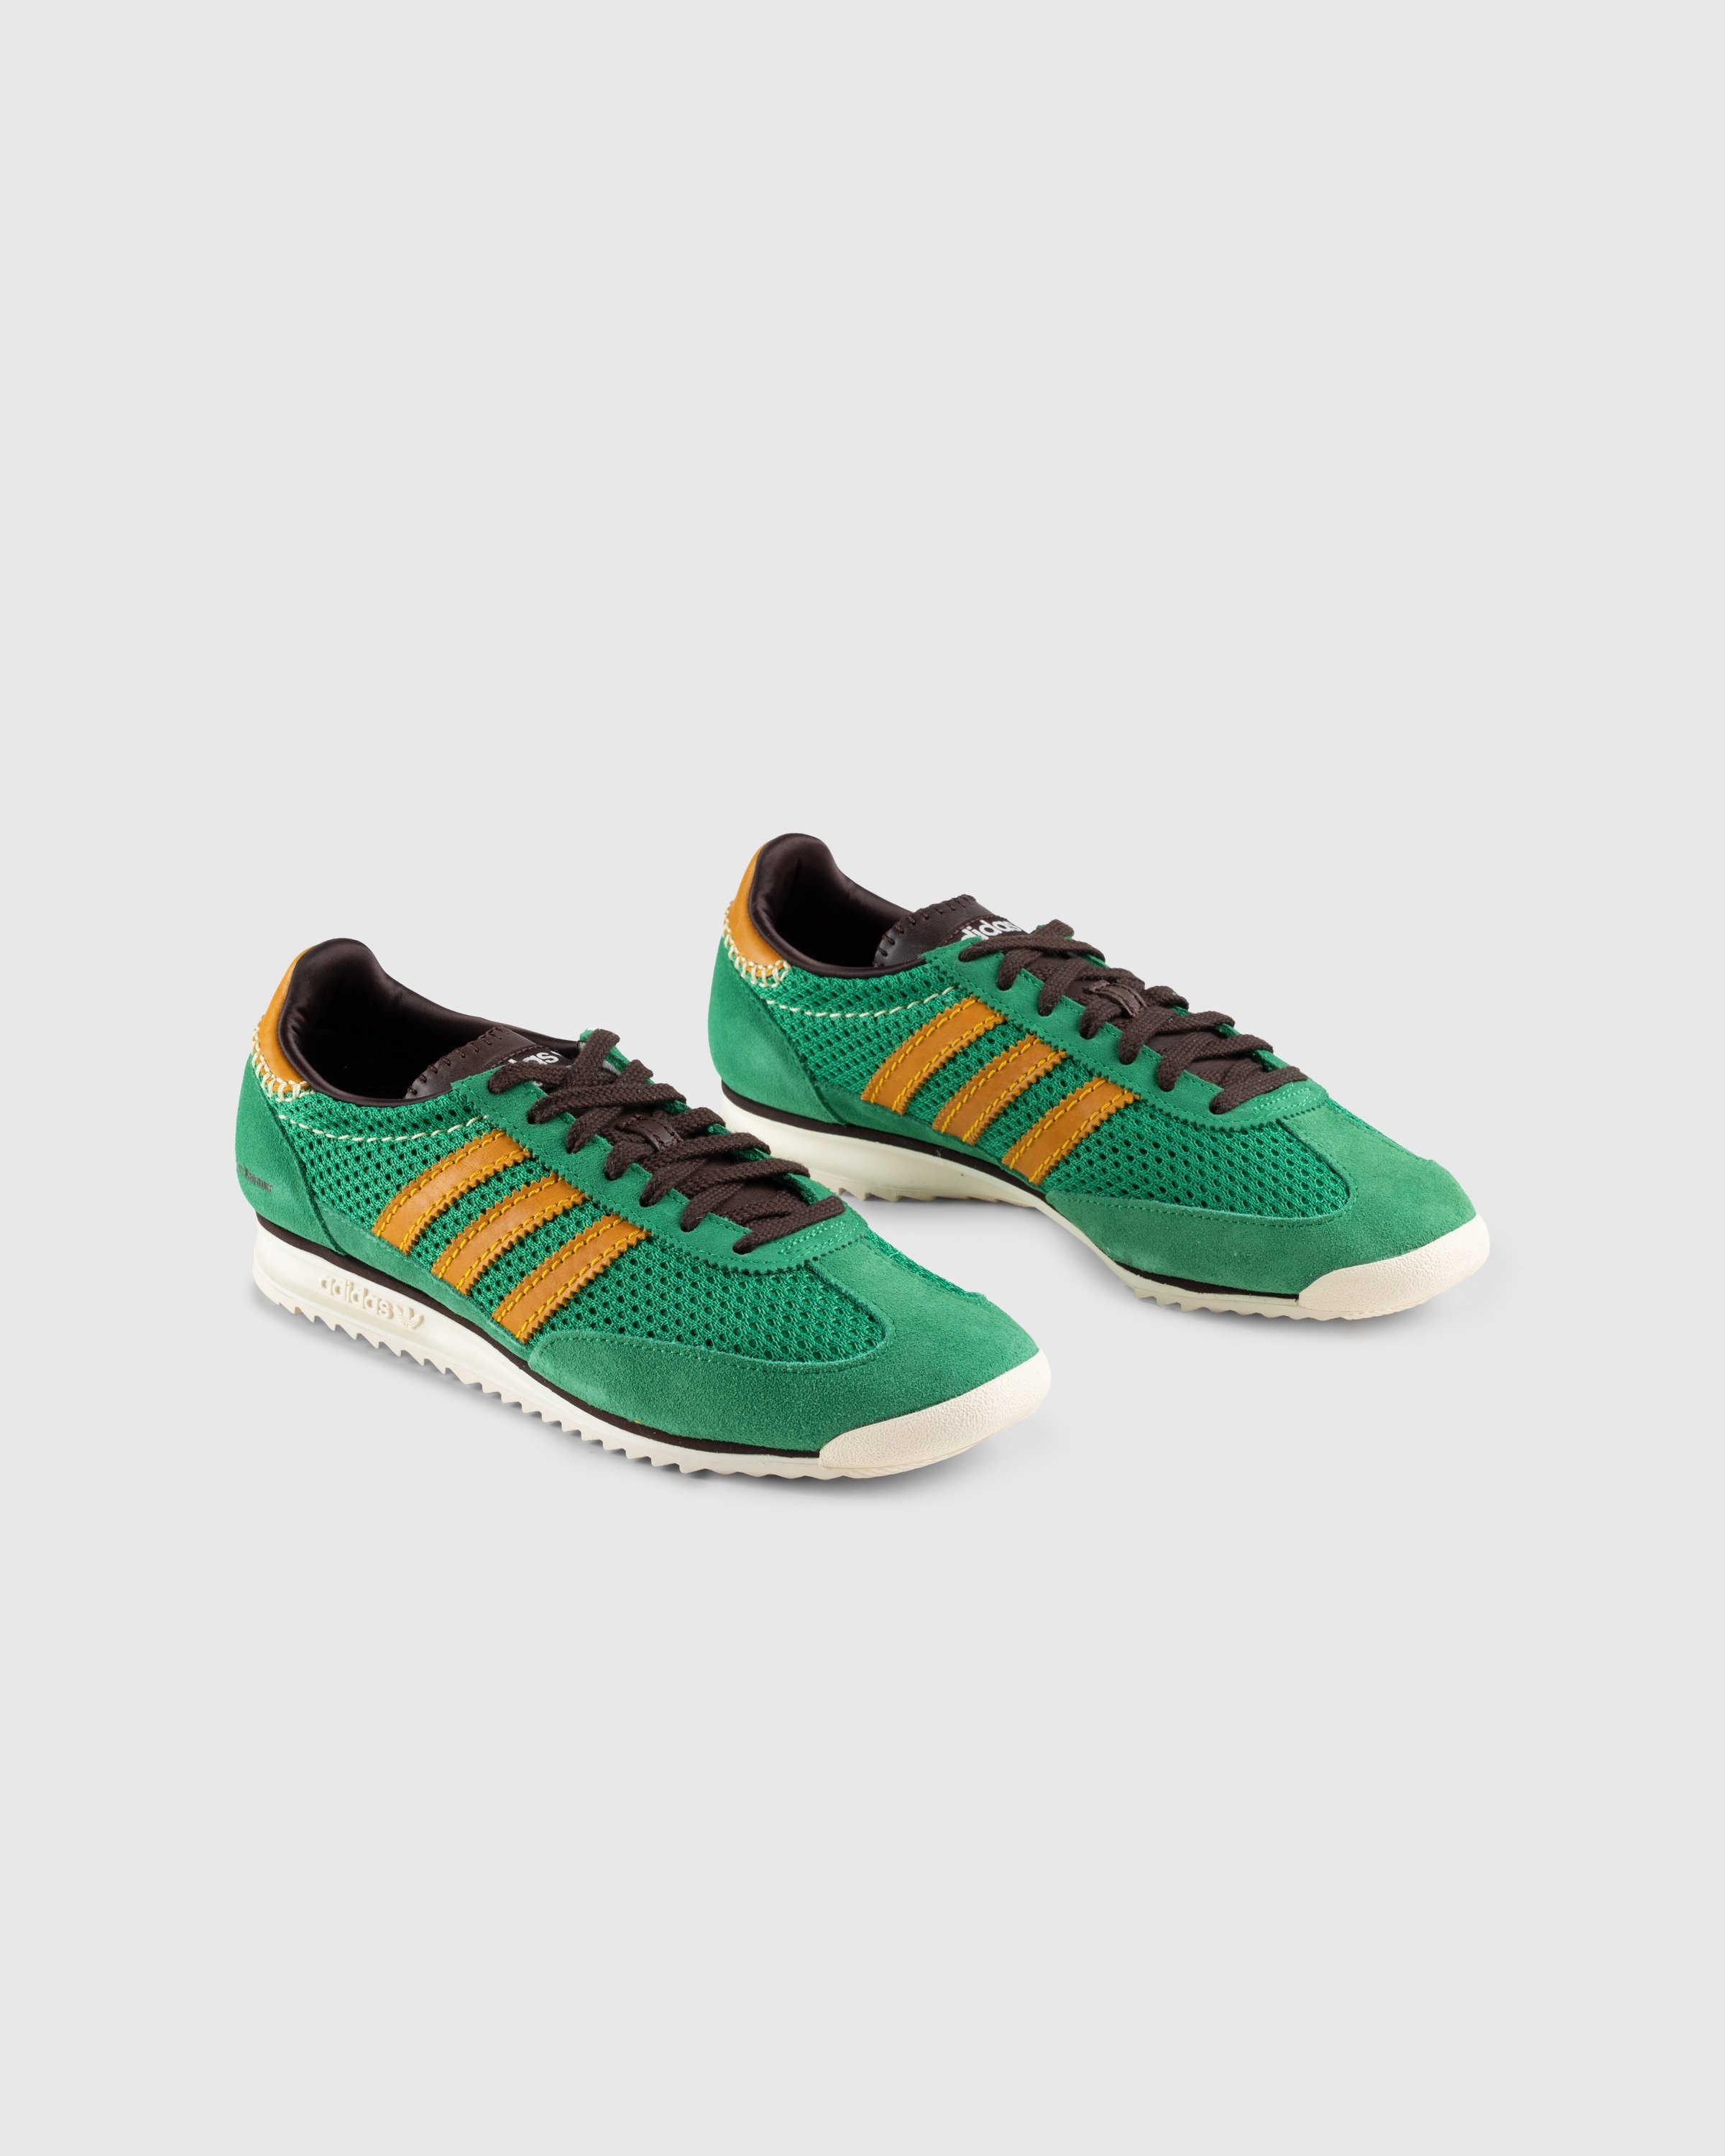 Adidas x Wales Bonner – SL72 Knit Team Green - Sneakers - Green - Image 3